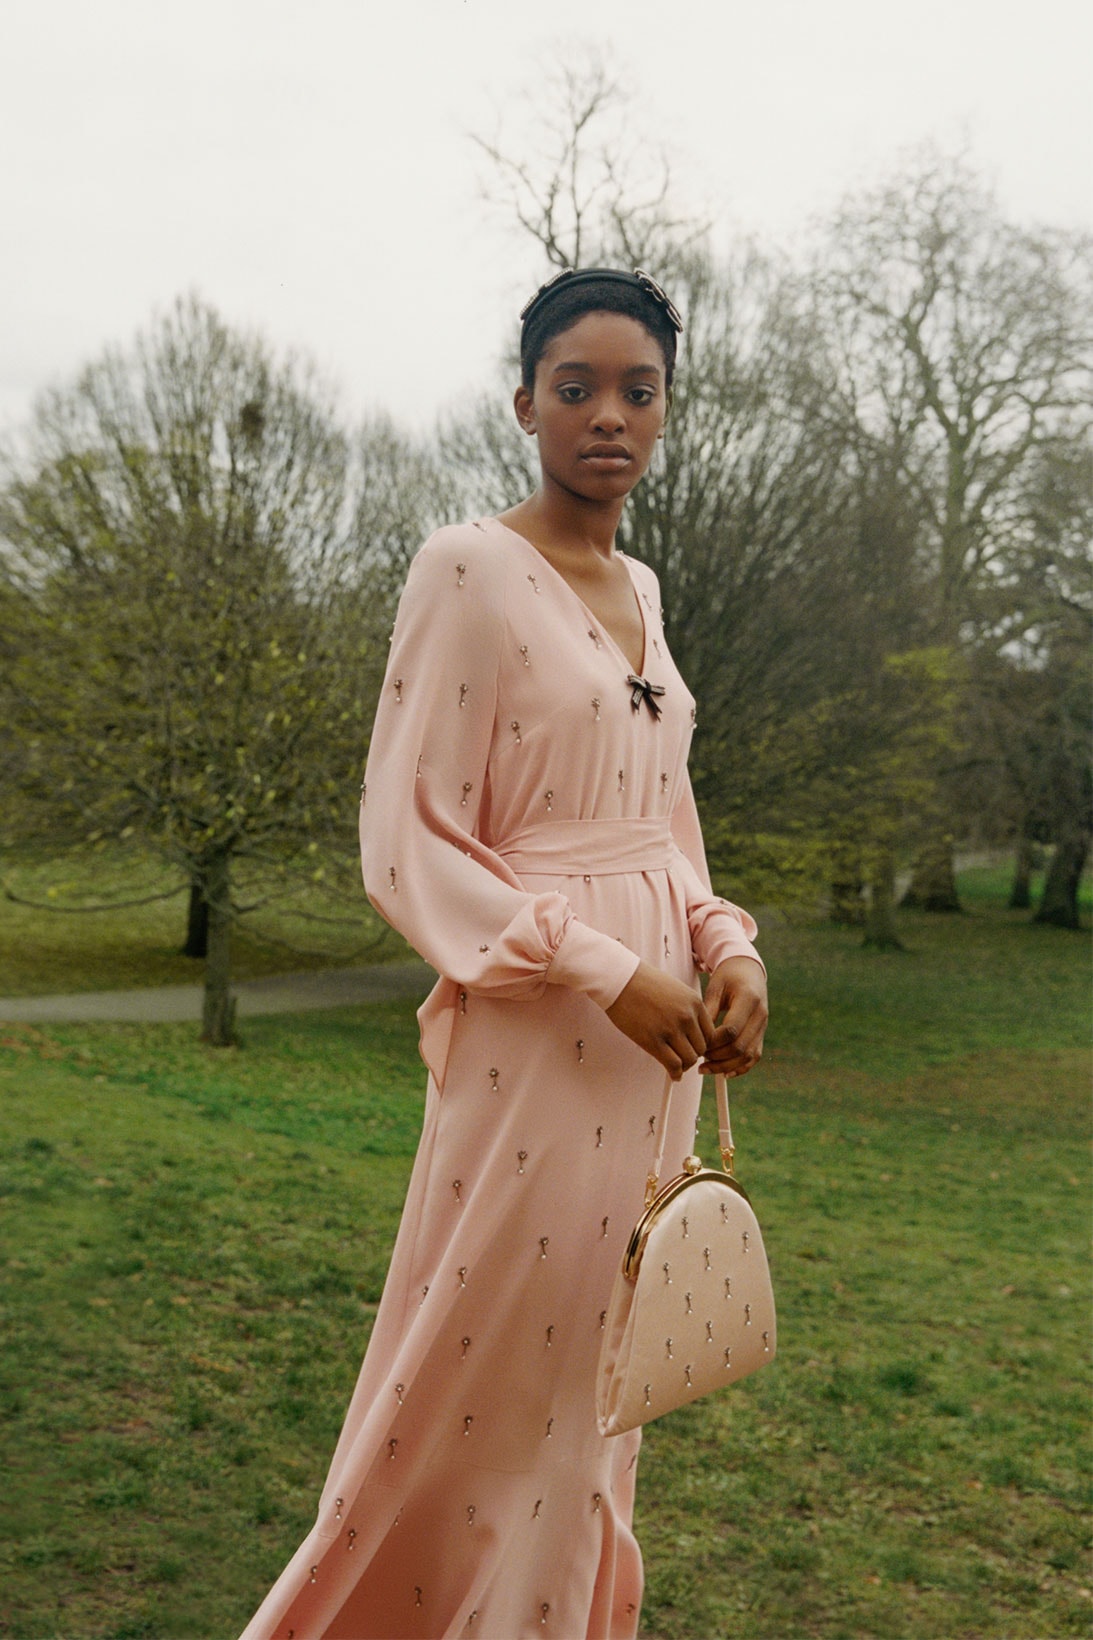 erdem moralioglu pre-fall 2021 collection lookbook nancy mitford pink dress